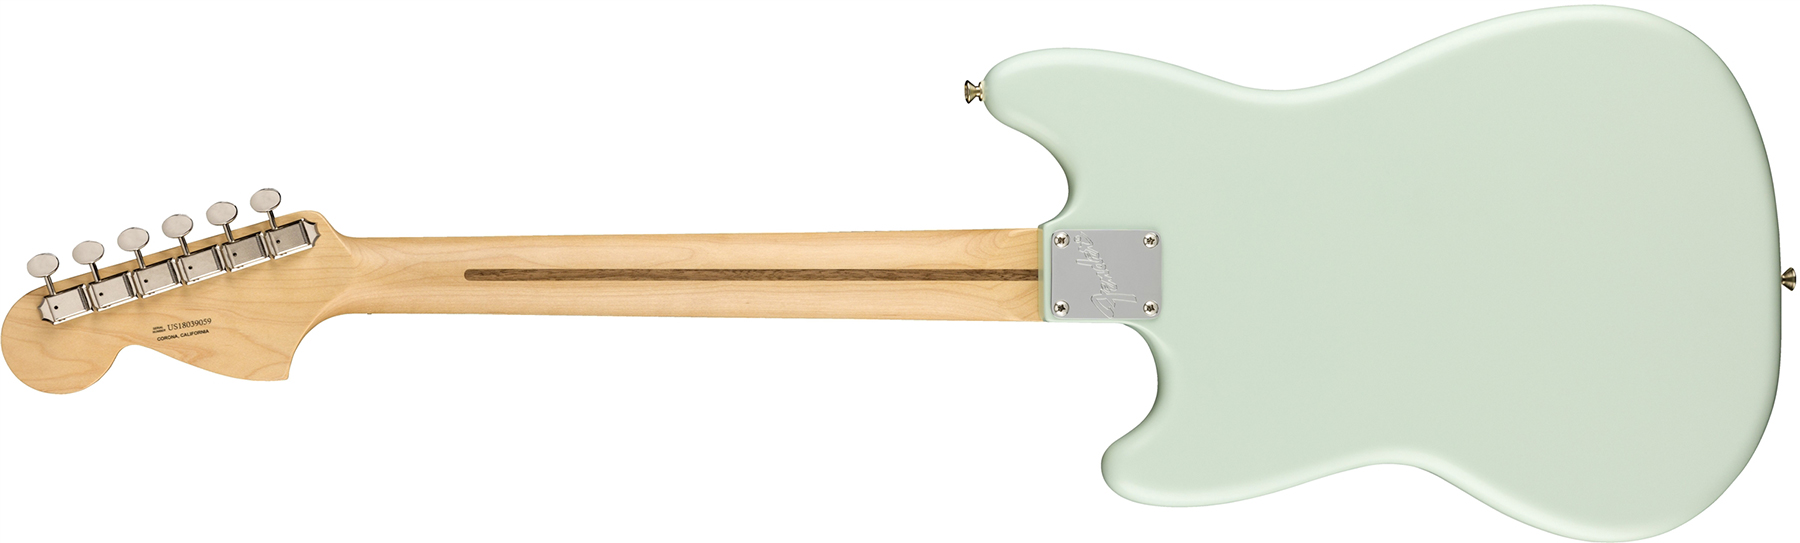 Fender Mustang American Performer Usa Ss Rw - Satin Sonic Blue - Guitarra eléctrica de doble corte. - Variation 1